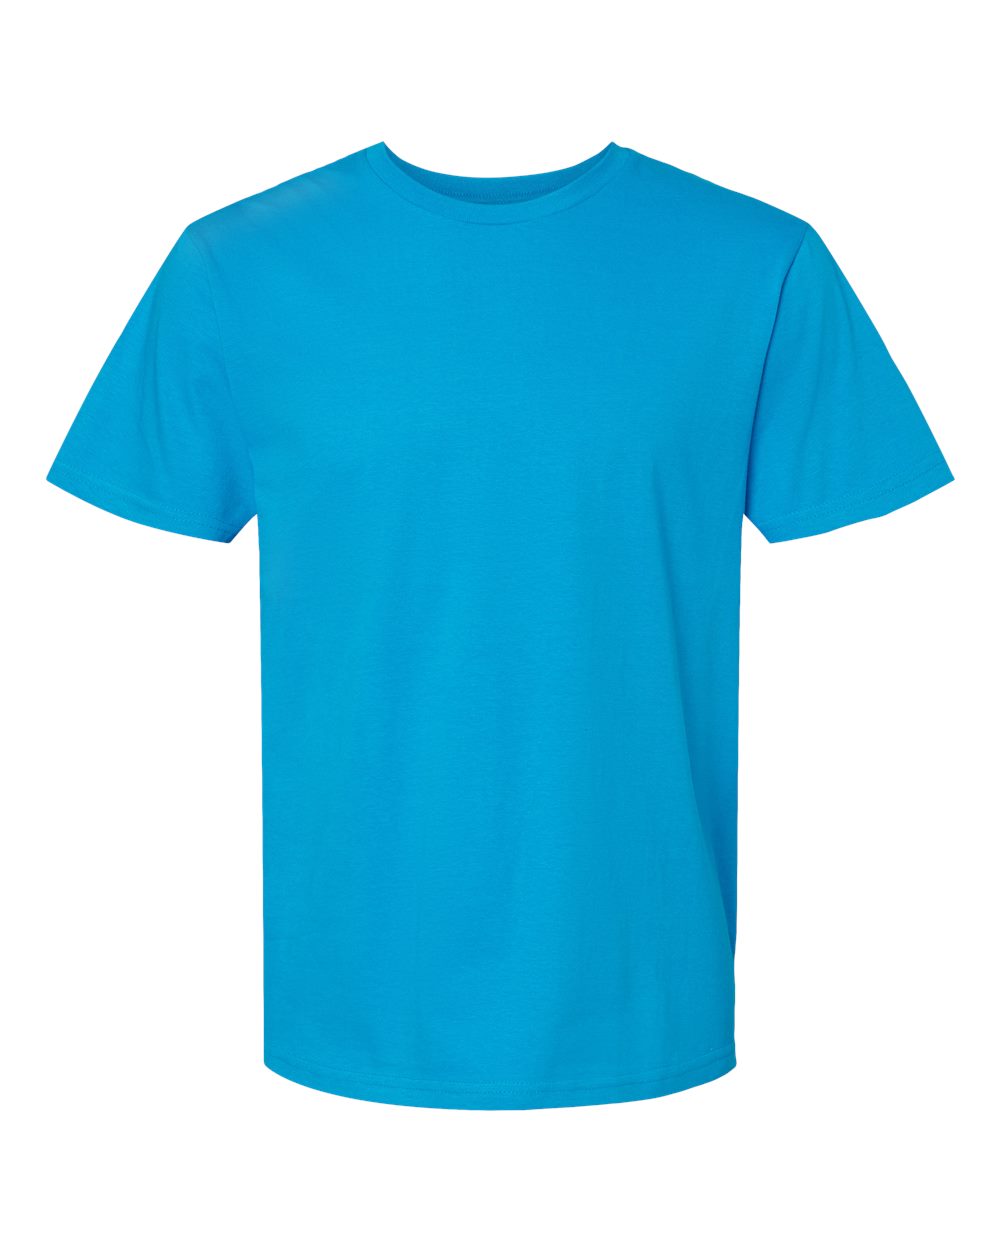 Softstyle® Midweight T-Shirt